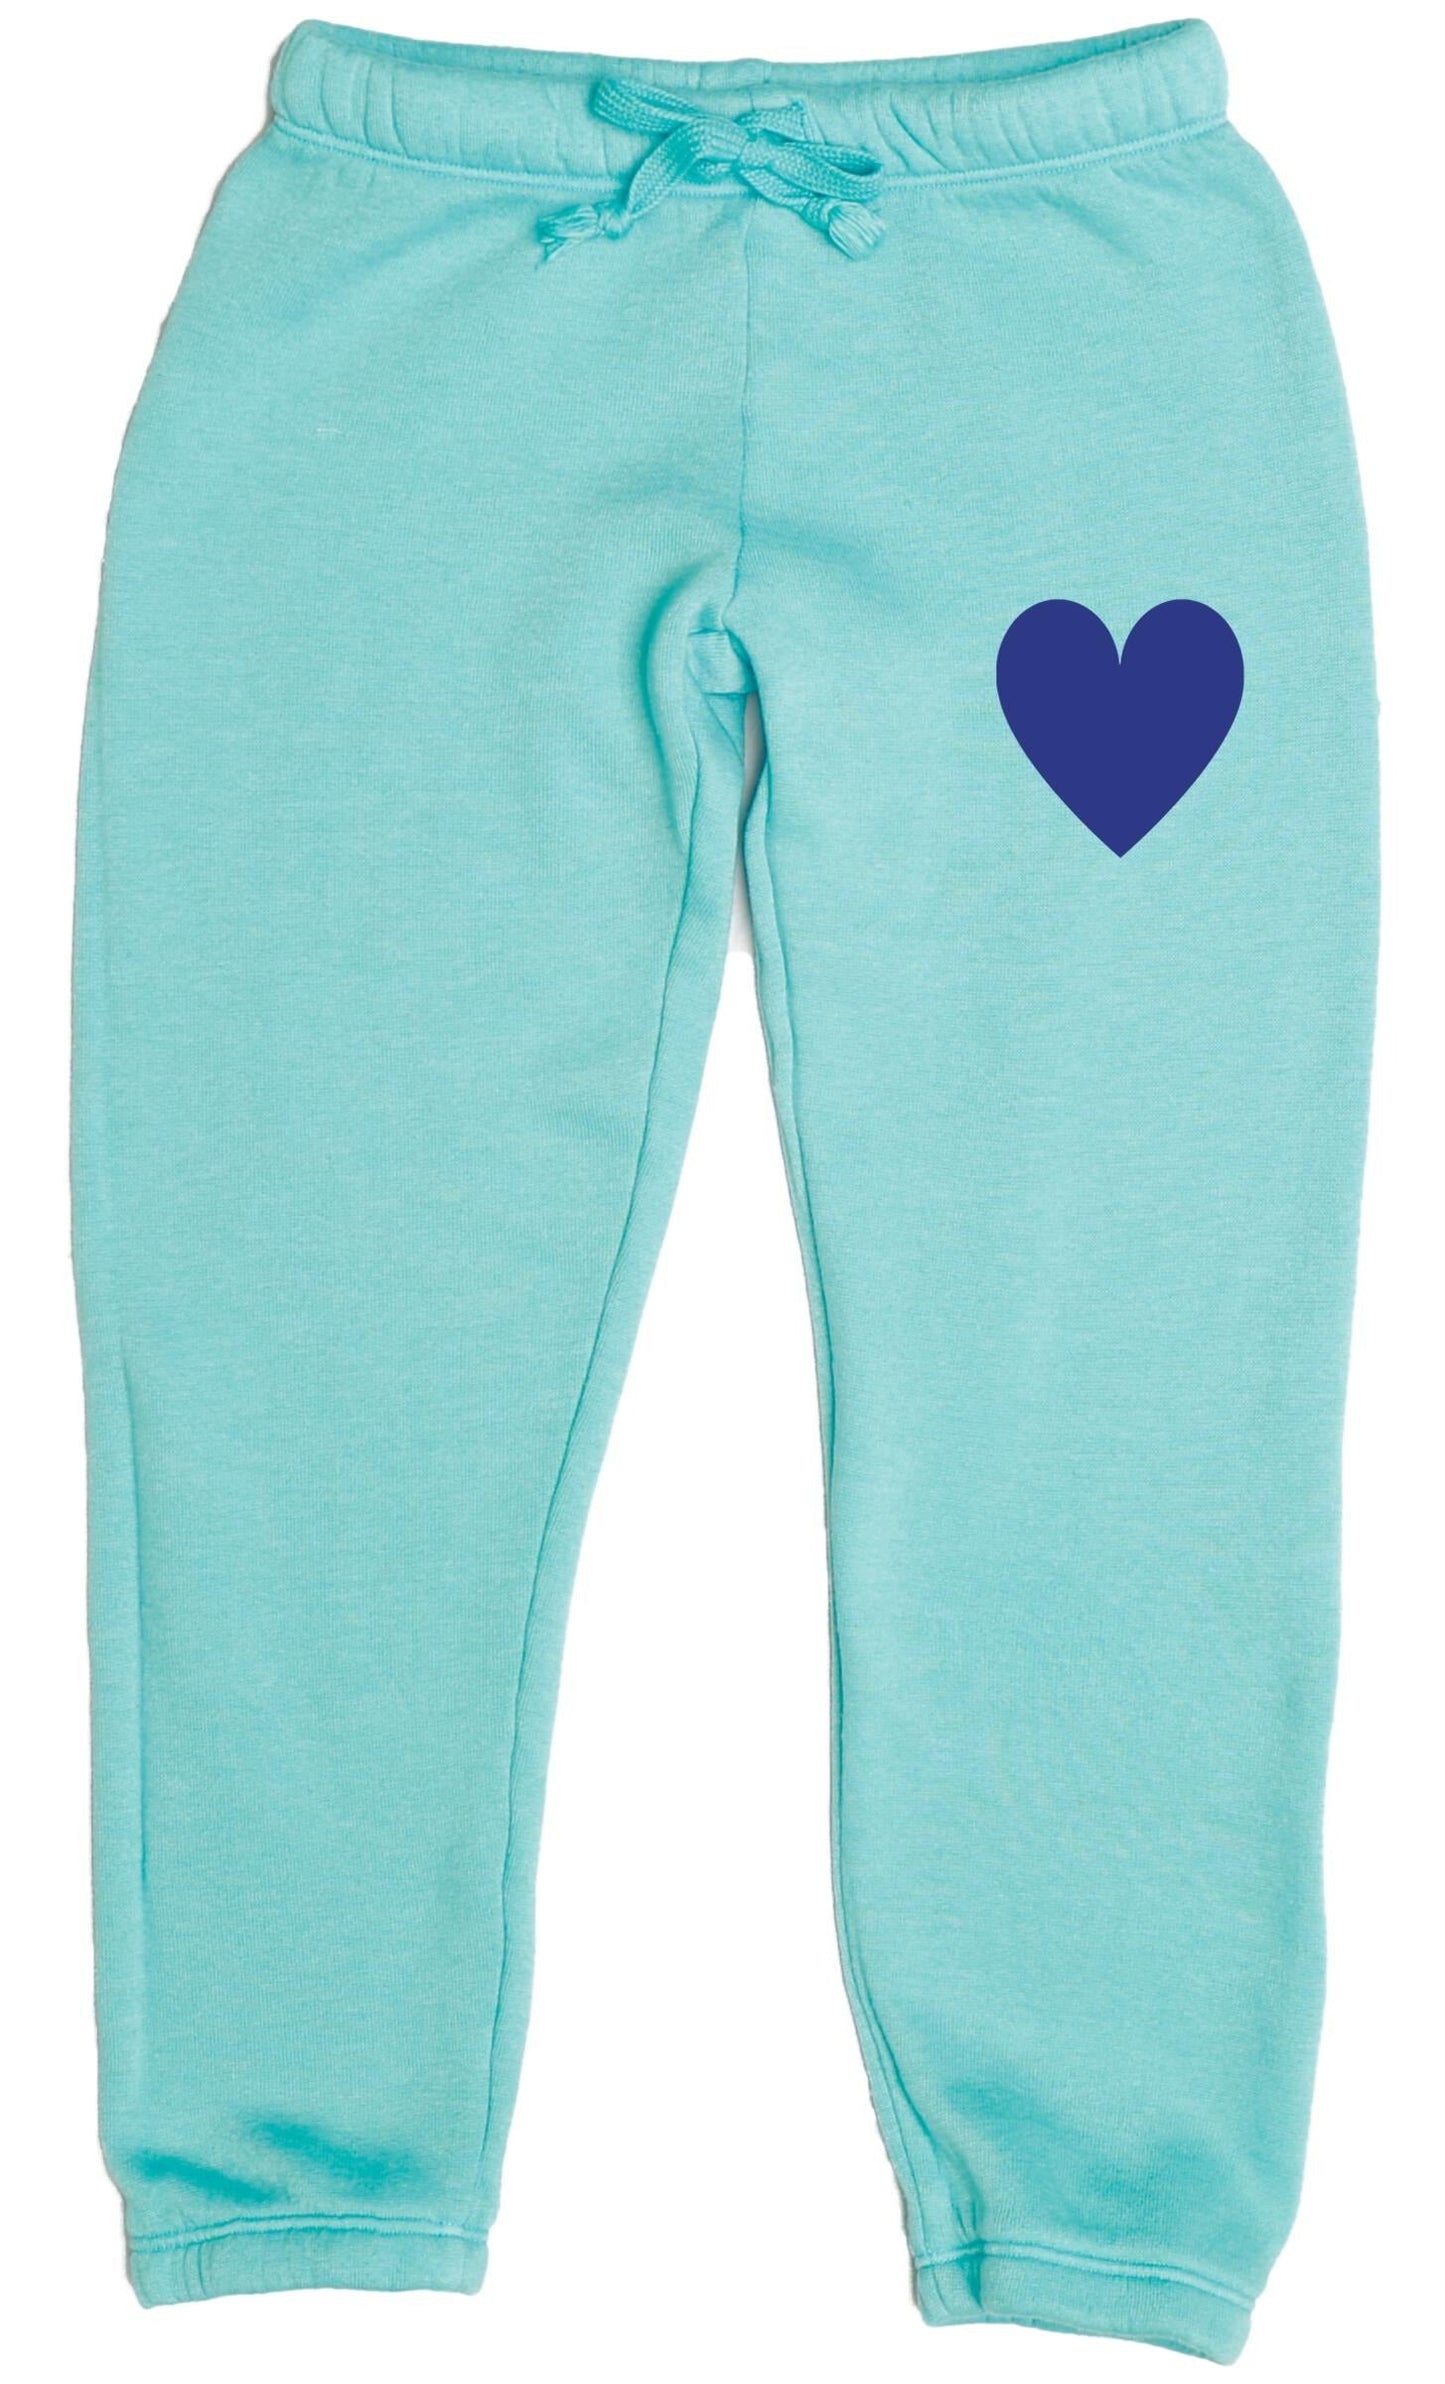 Athletic Pants (Mini Blue Heart Print)